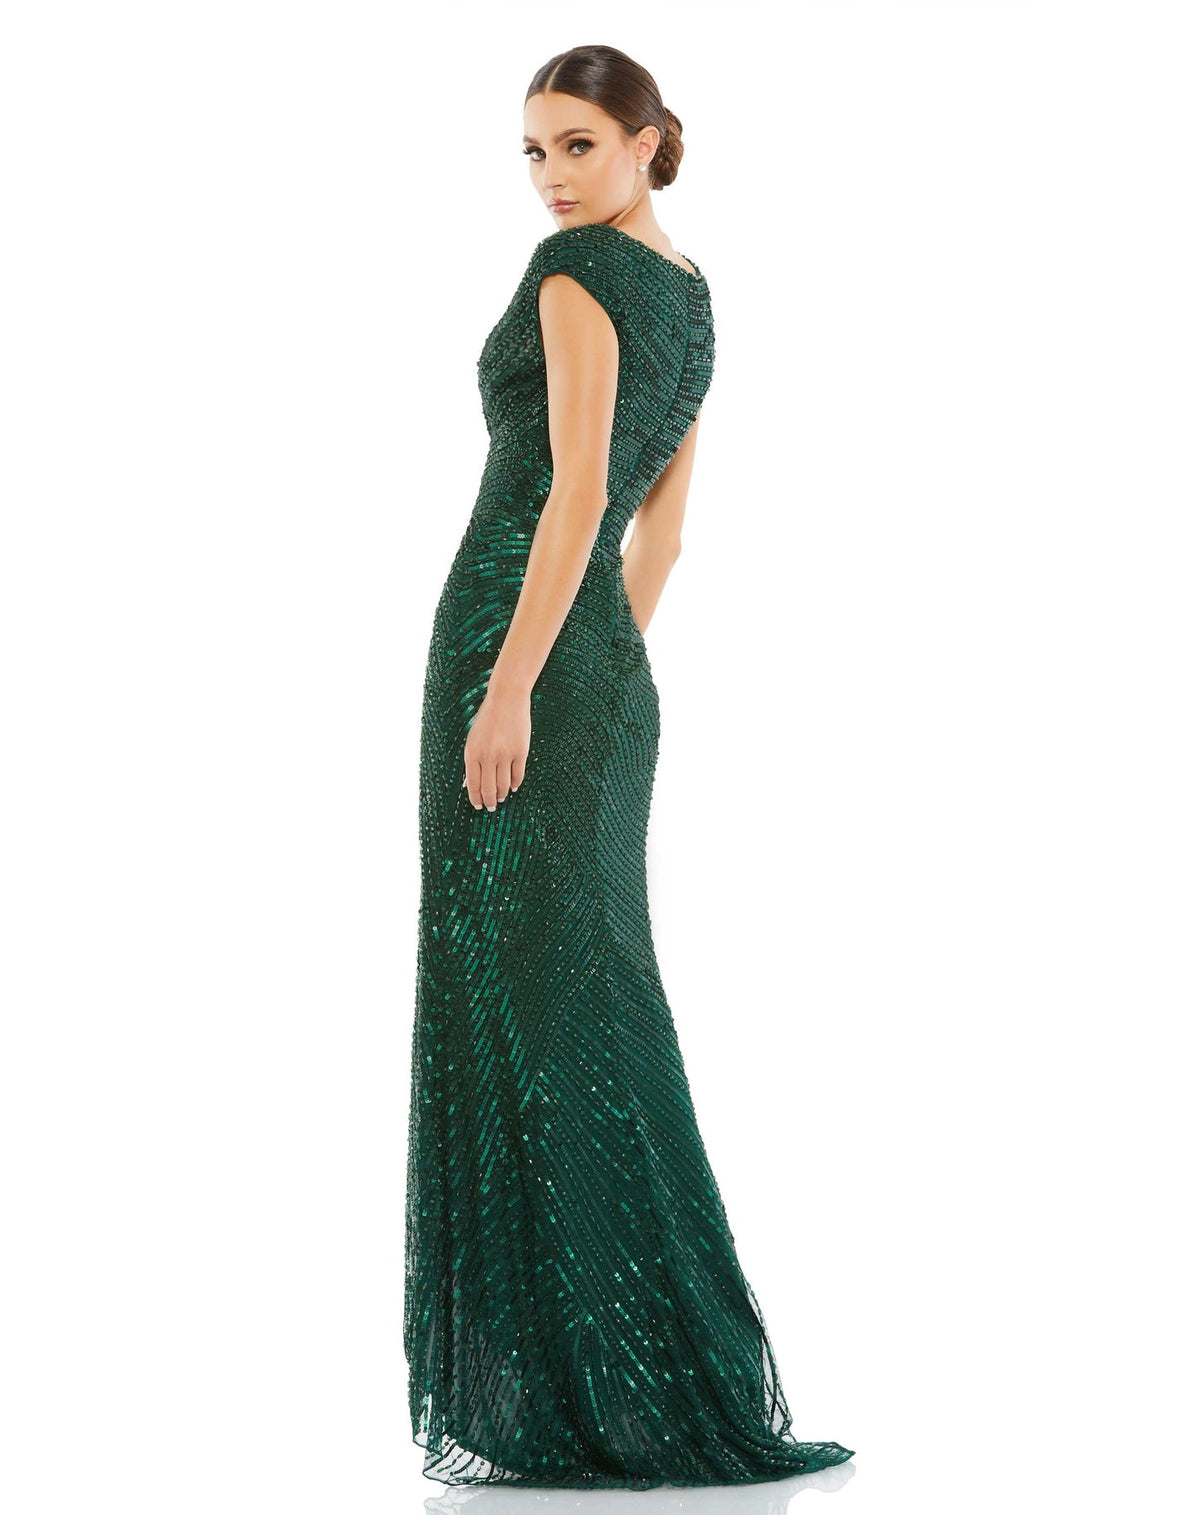 Cap sleeve evening Gown - Emerald